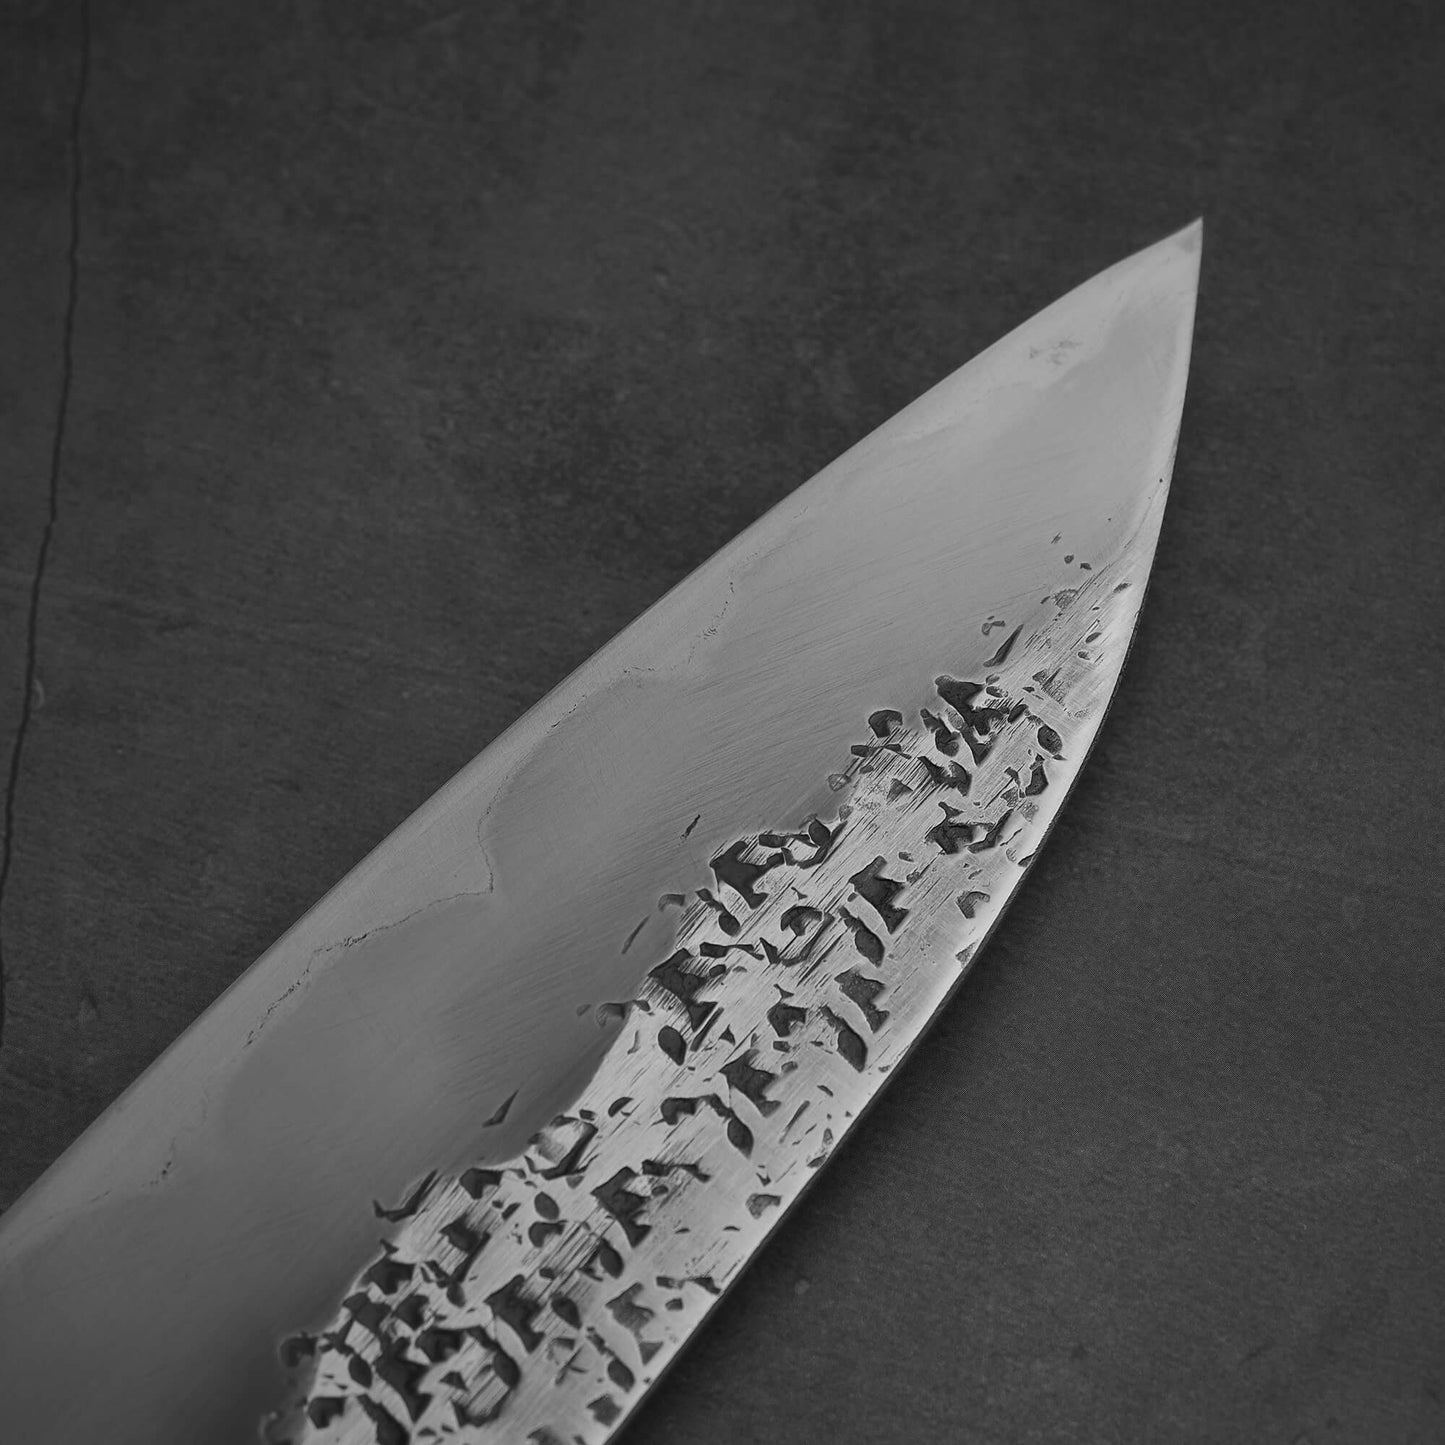 Close up view of 240mm Kisuke Manaka tsuchime honwarikomi shirogami#2 gyuto knife. Image focuses on the tip area on the left side of the knife